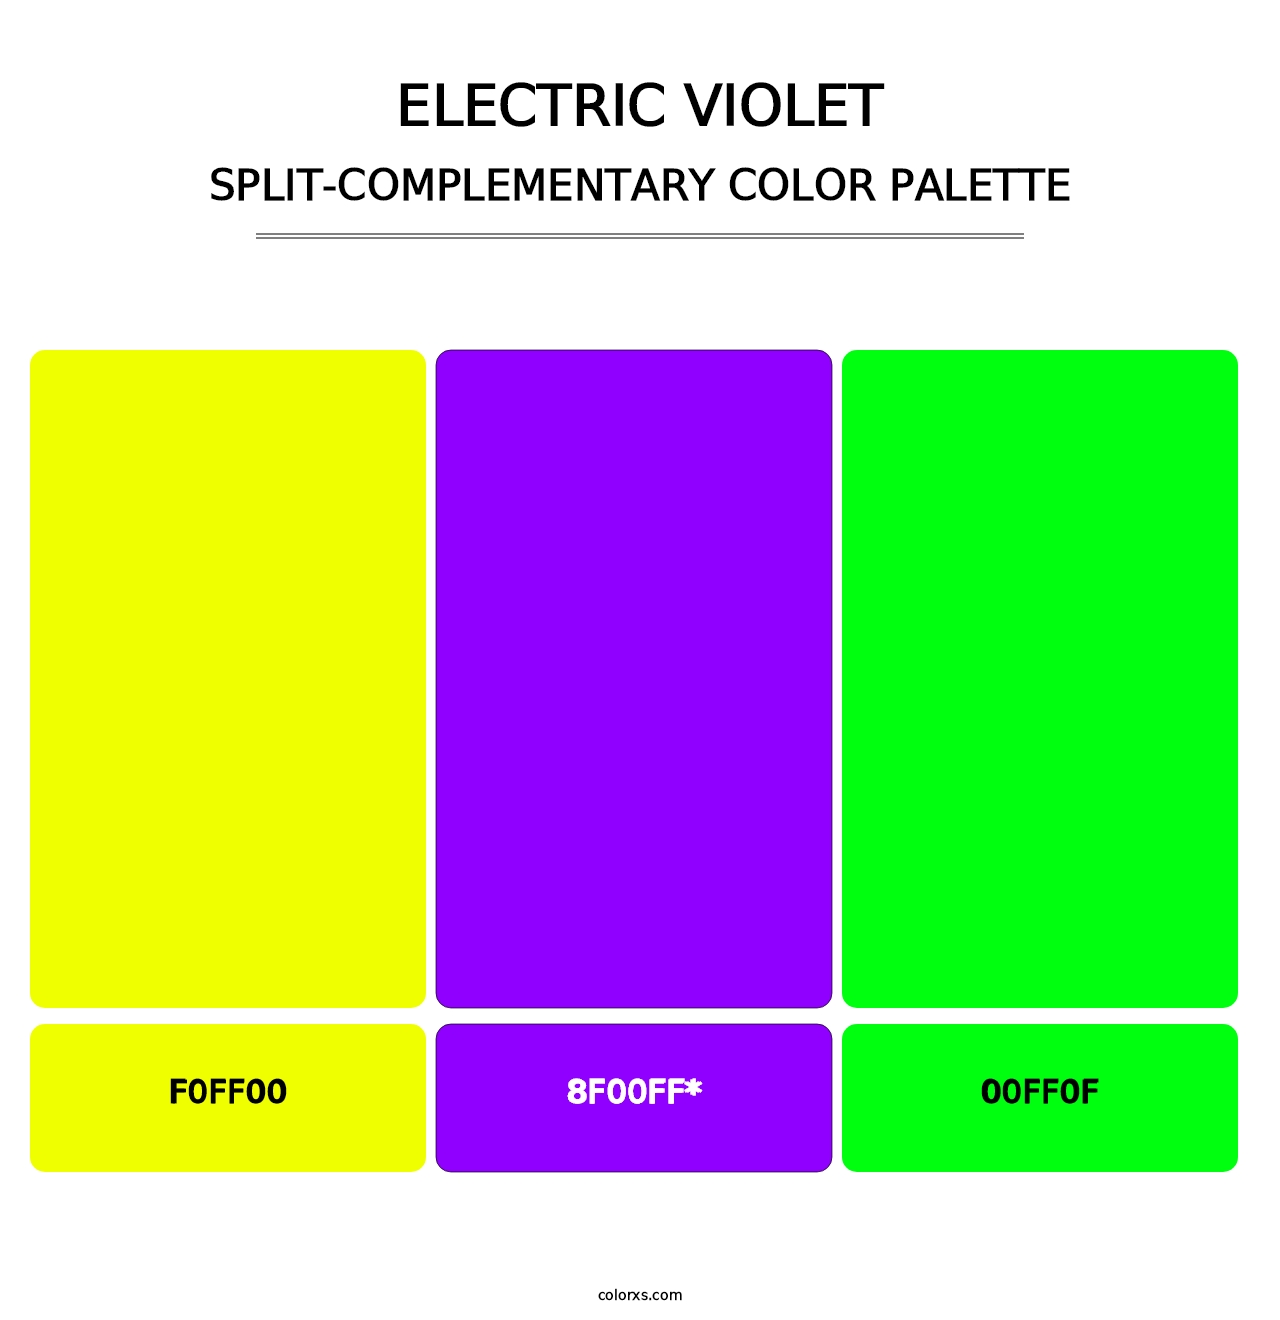 Electric Violet - Split-Complementary Color Palette